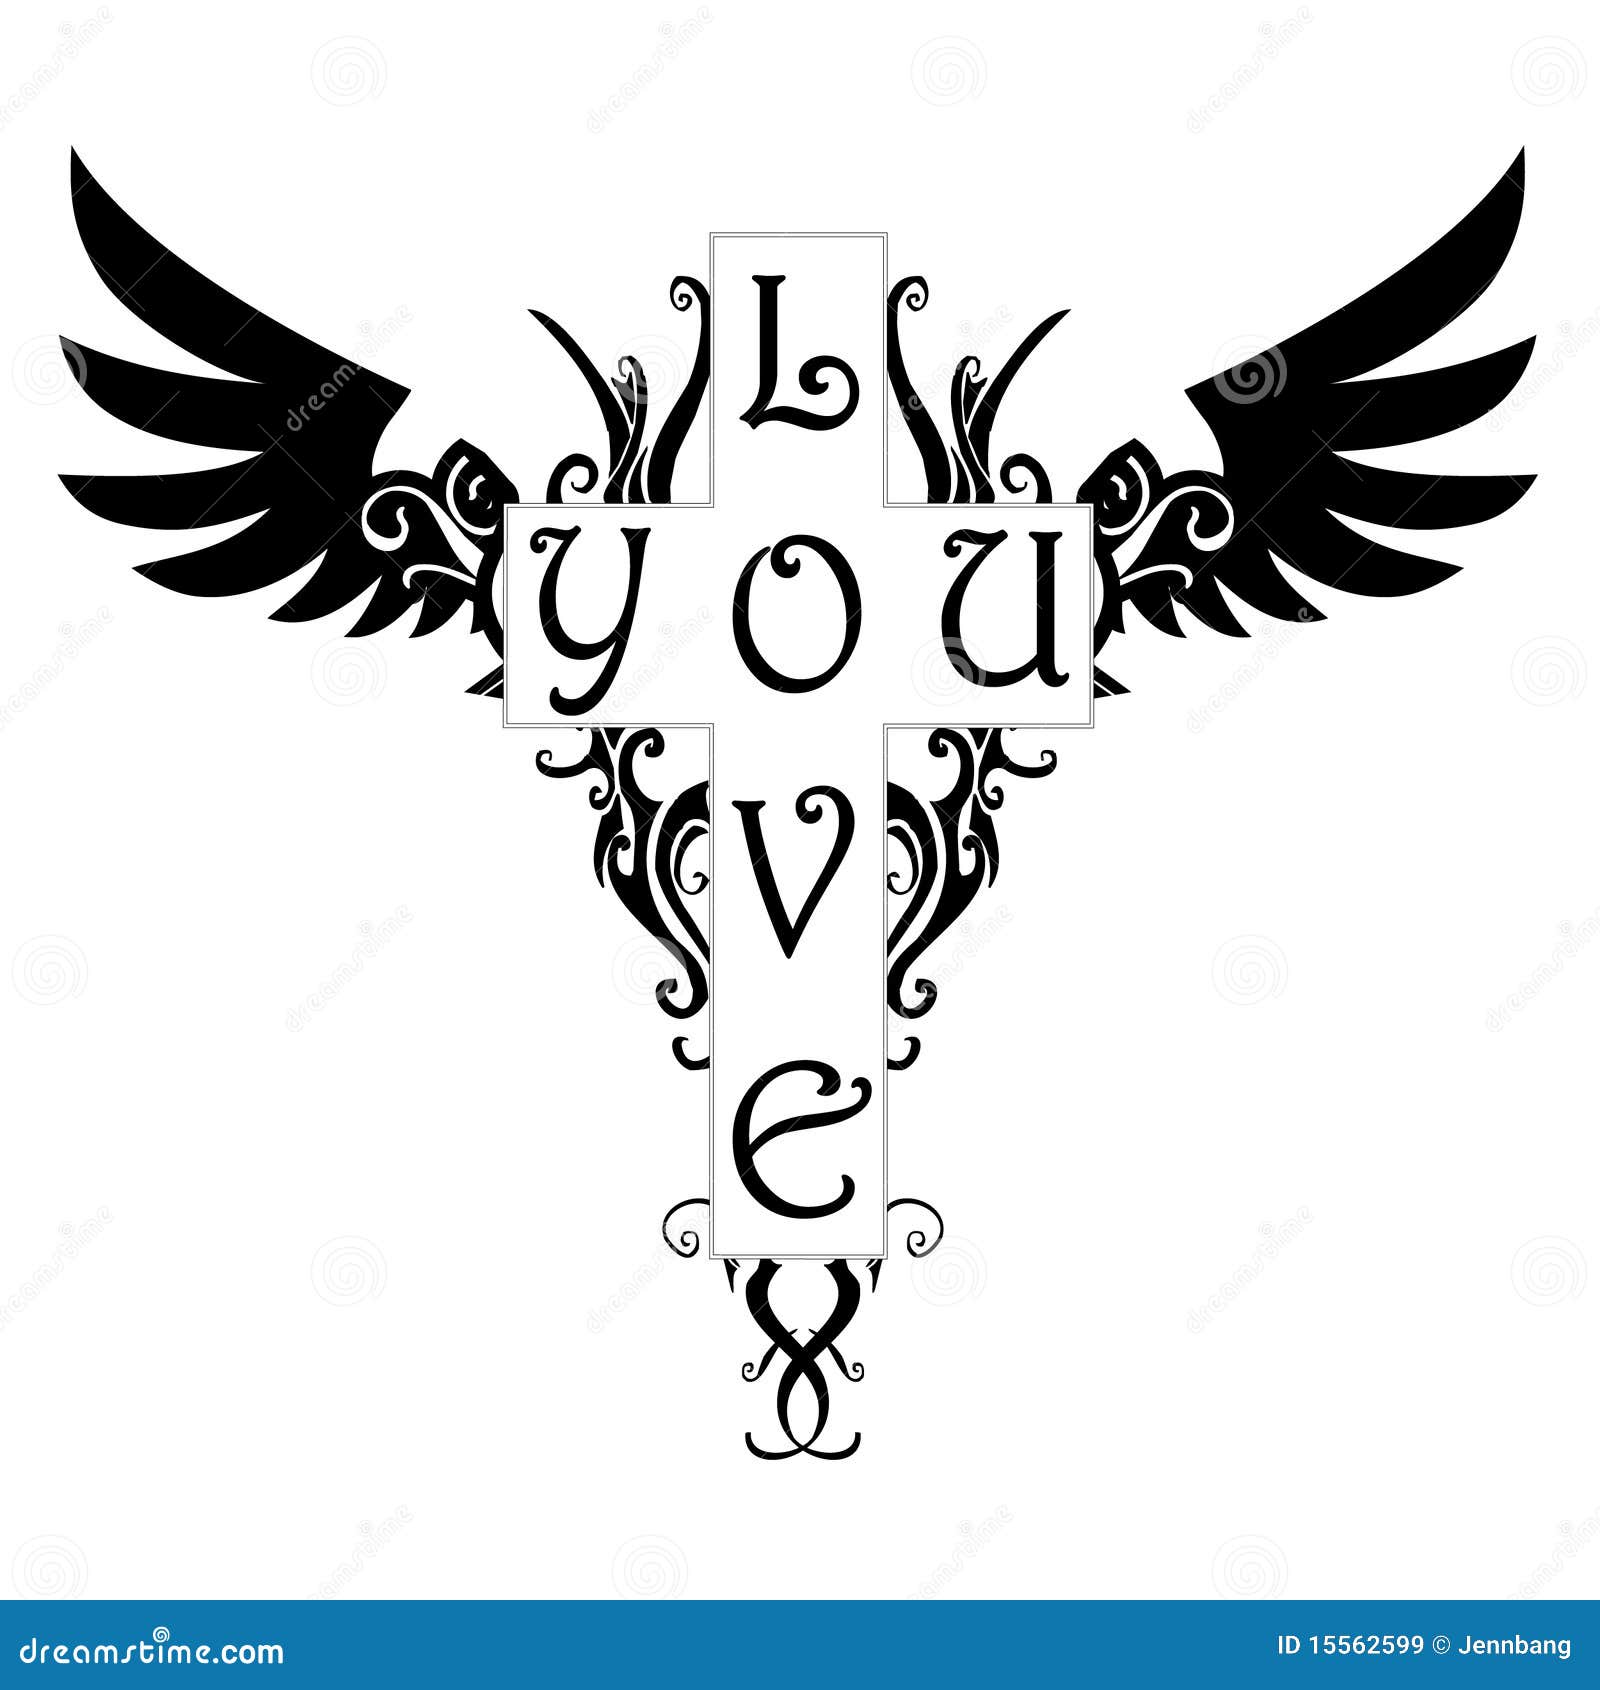 Love you tattoo stock vector. Illustration of symbol - 15562599